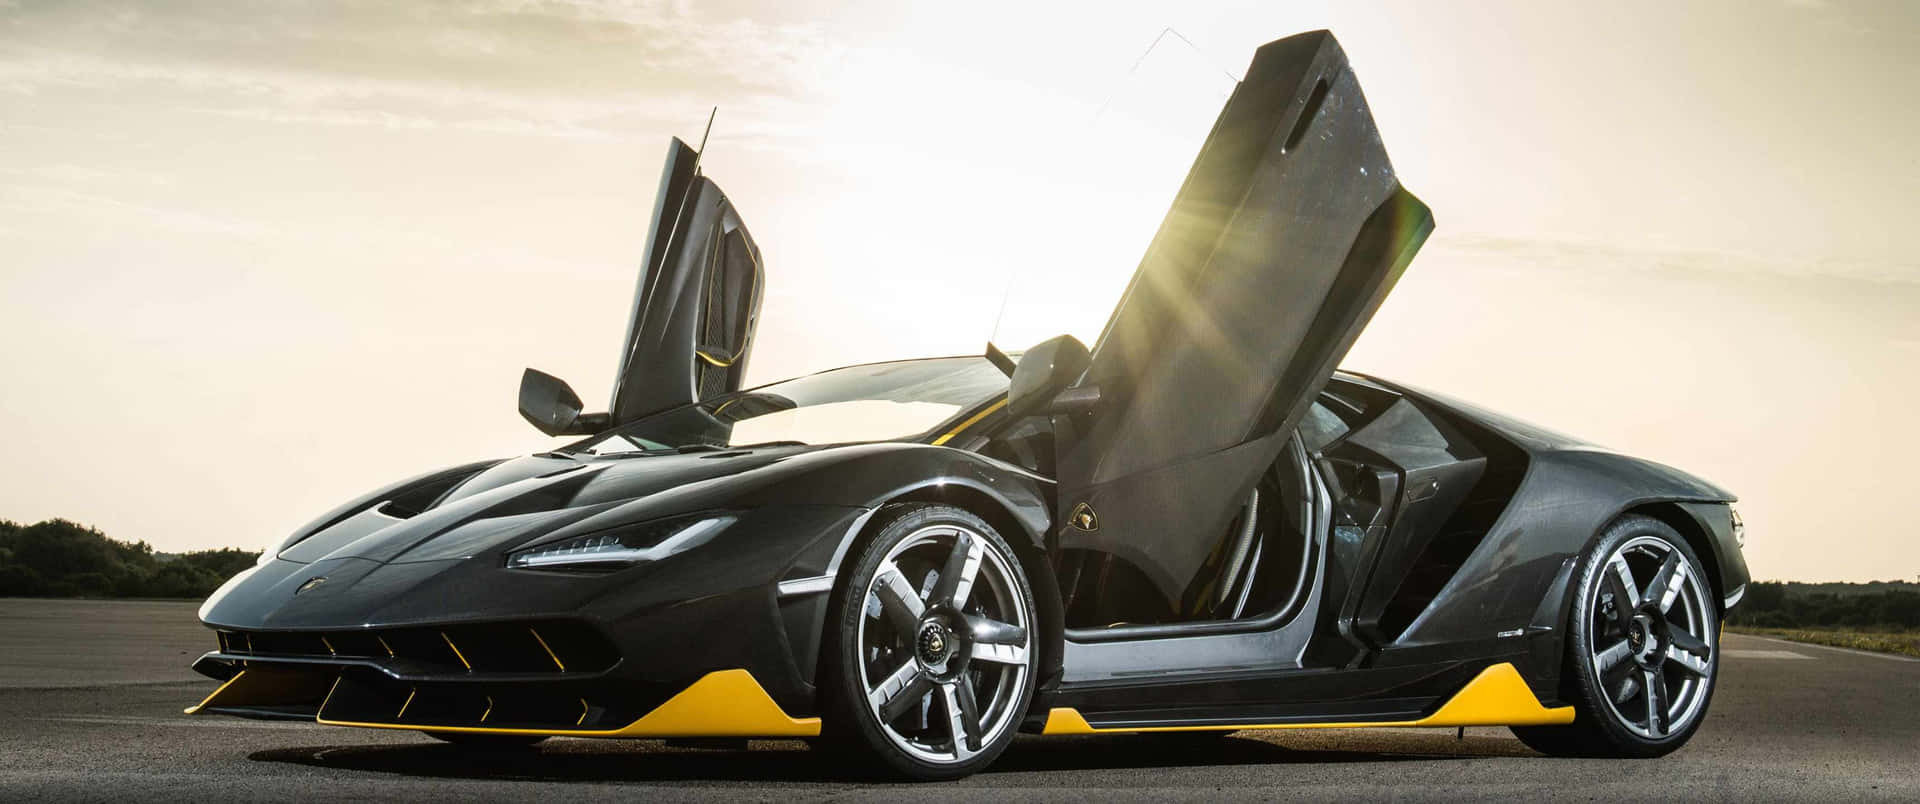 Get behind the wheel of a Lamborghini